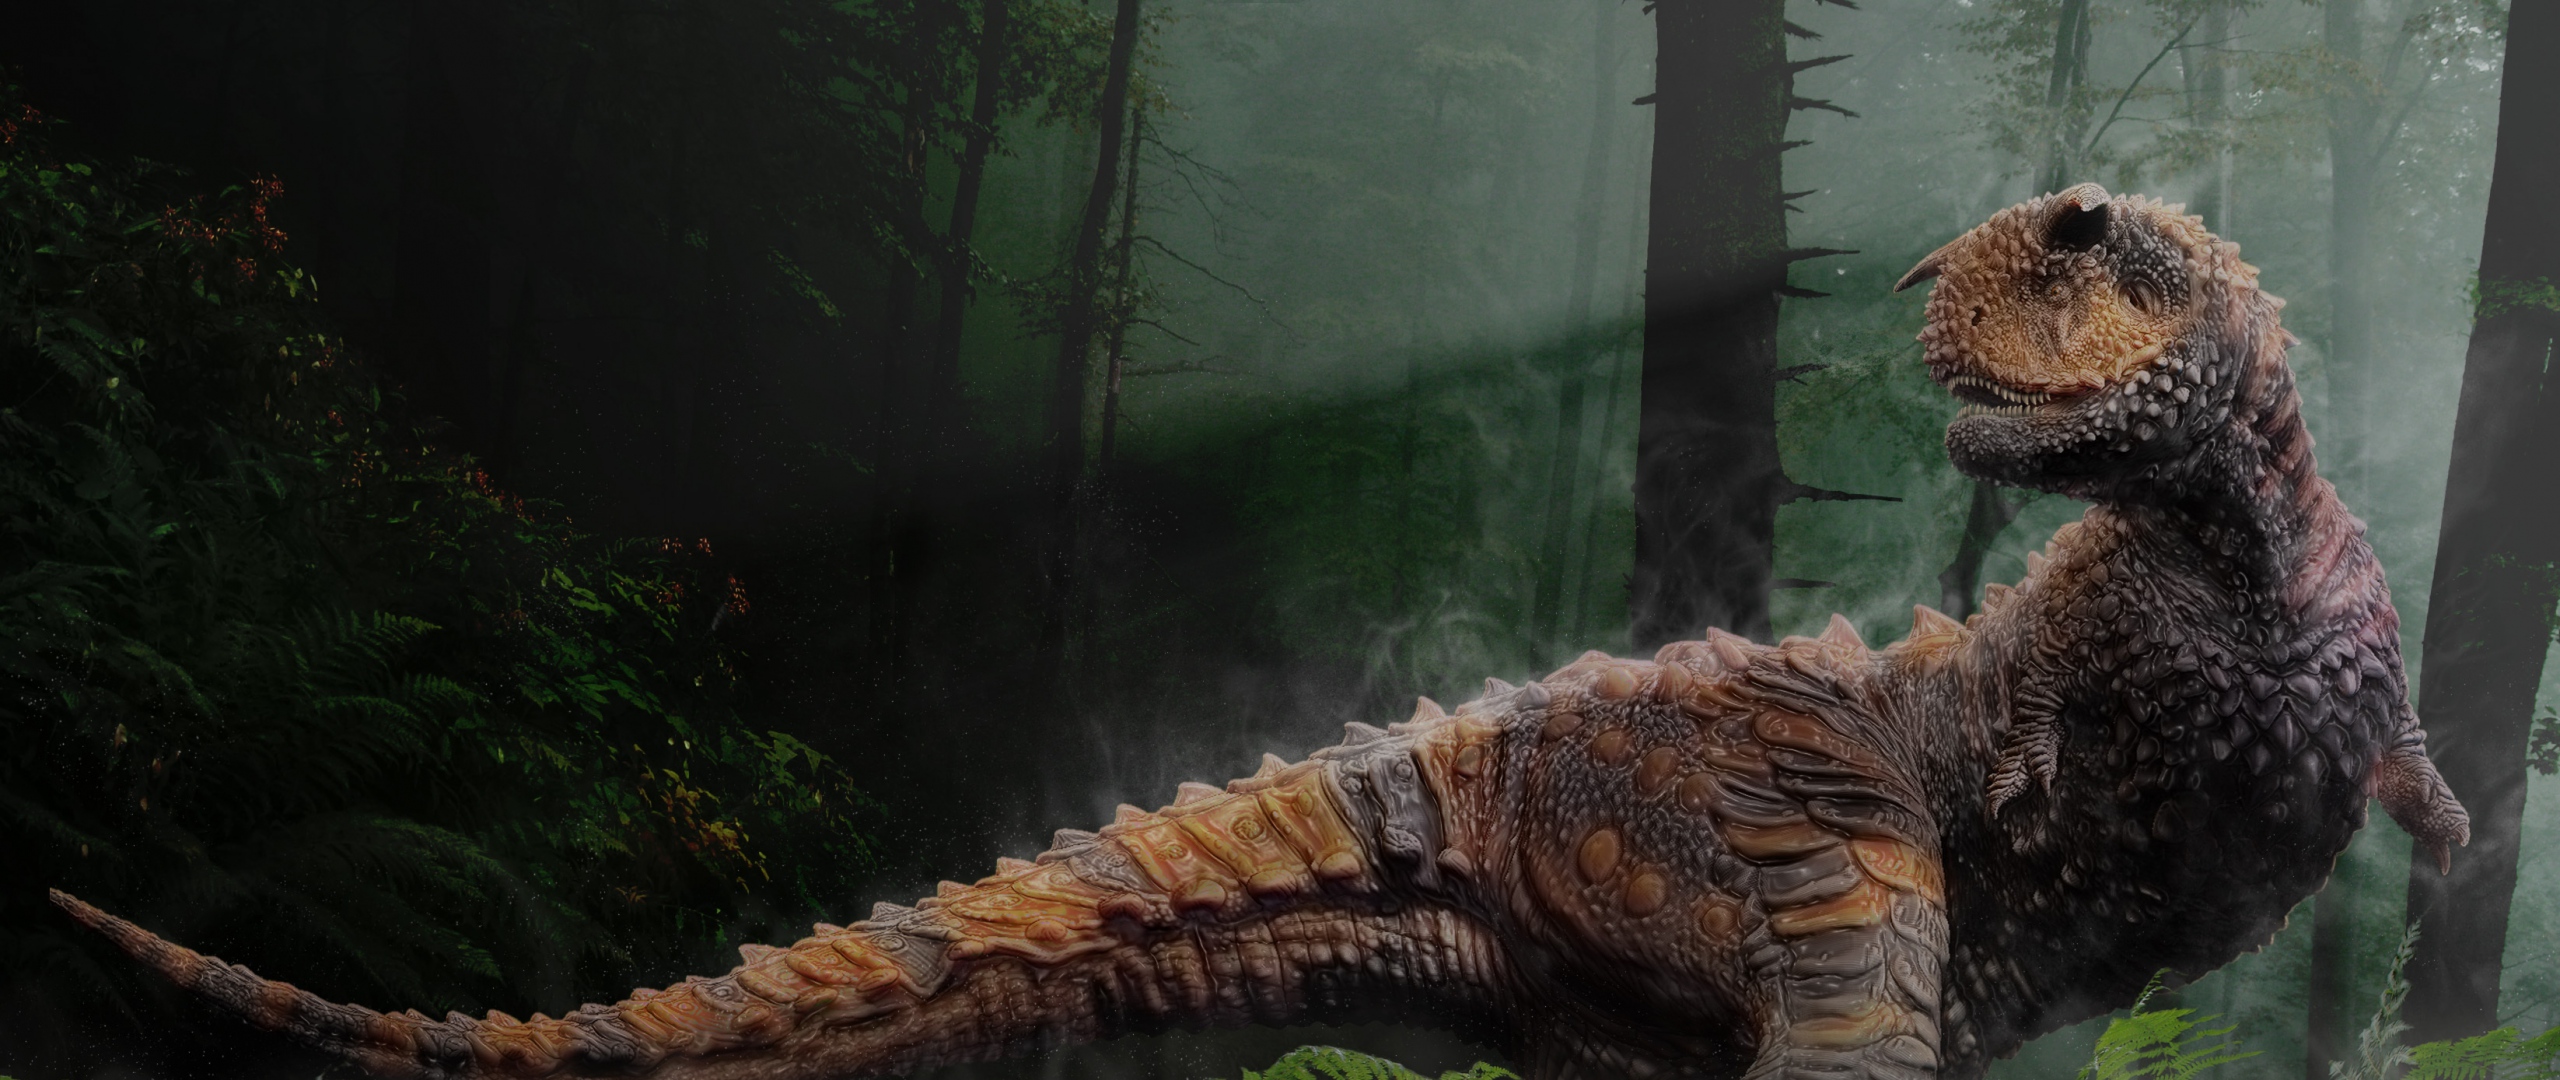 Dinosaur Grass Trees Reptiles Mesozoic Era Wallpaper Background